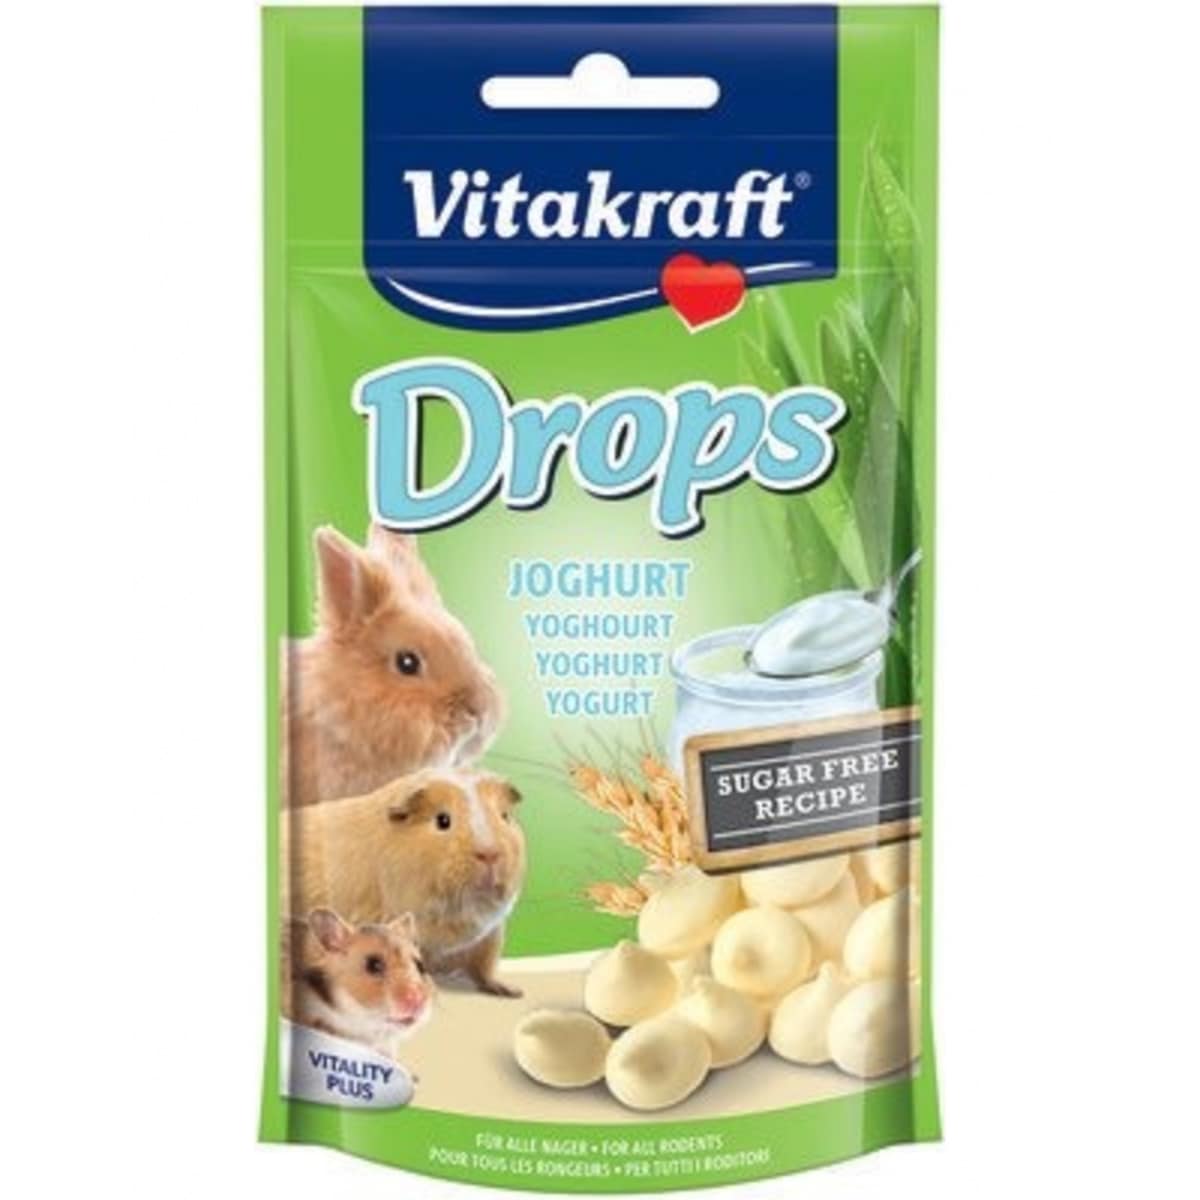 Vitakraft Small Animal Drops 75g - Yoghurt Main Image